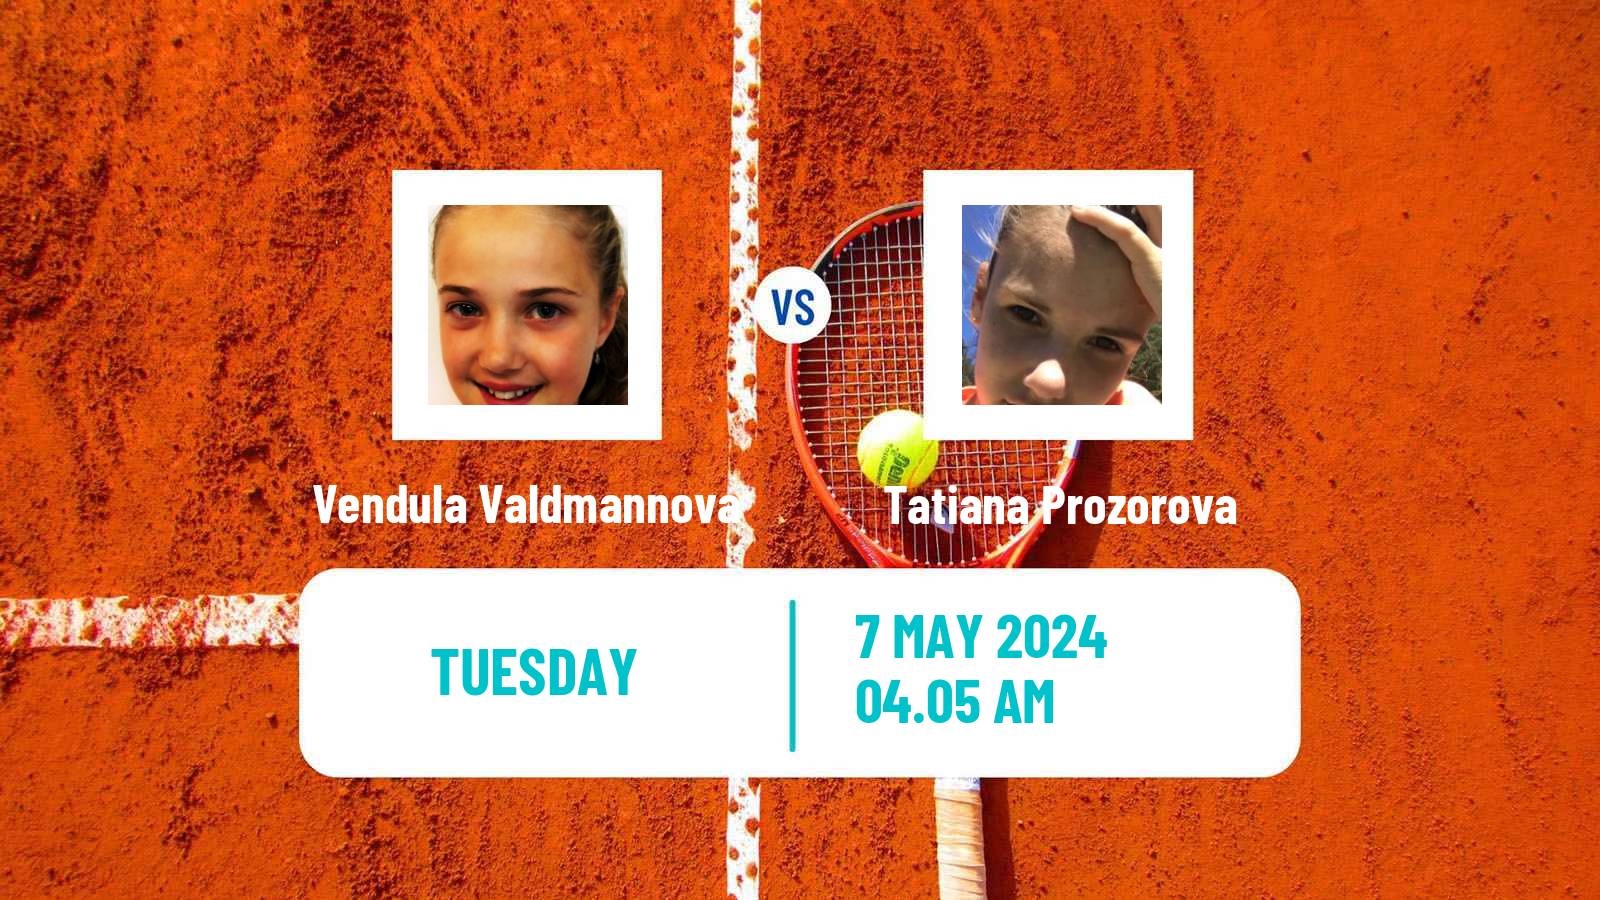 Tennis ITF W75 Trnava 2 Women Vendula Valdmannova - Tatiana Prozorova